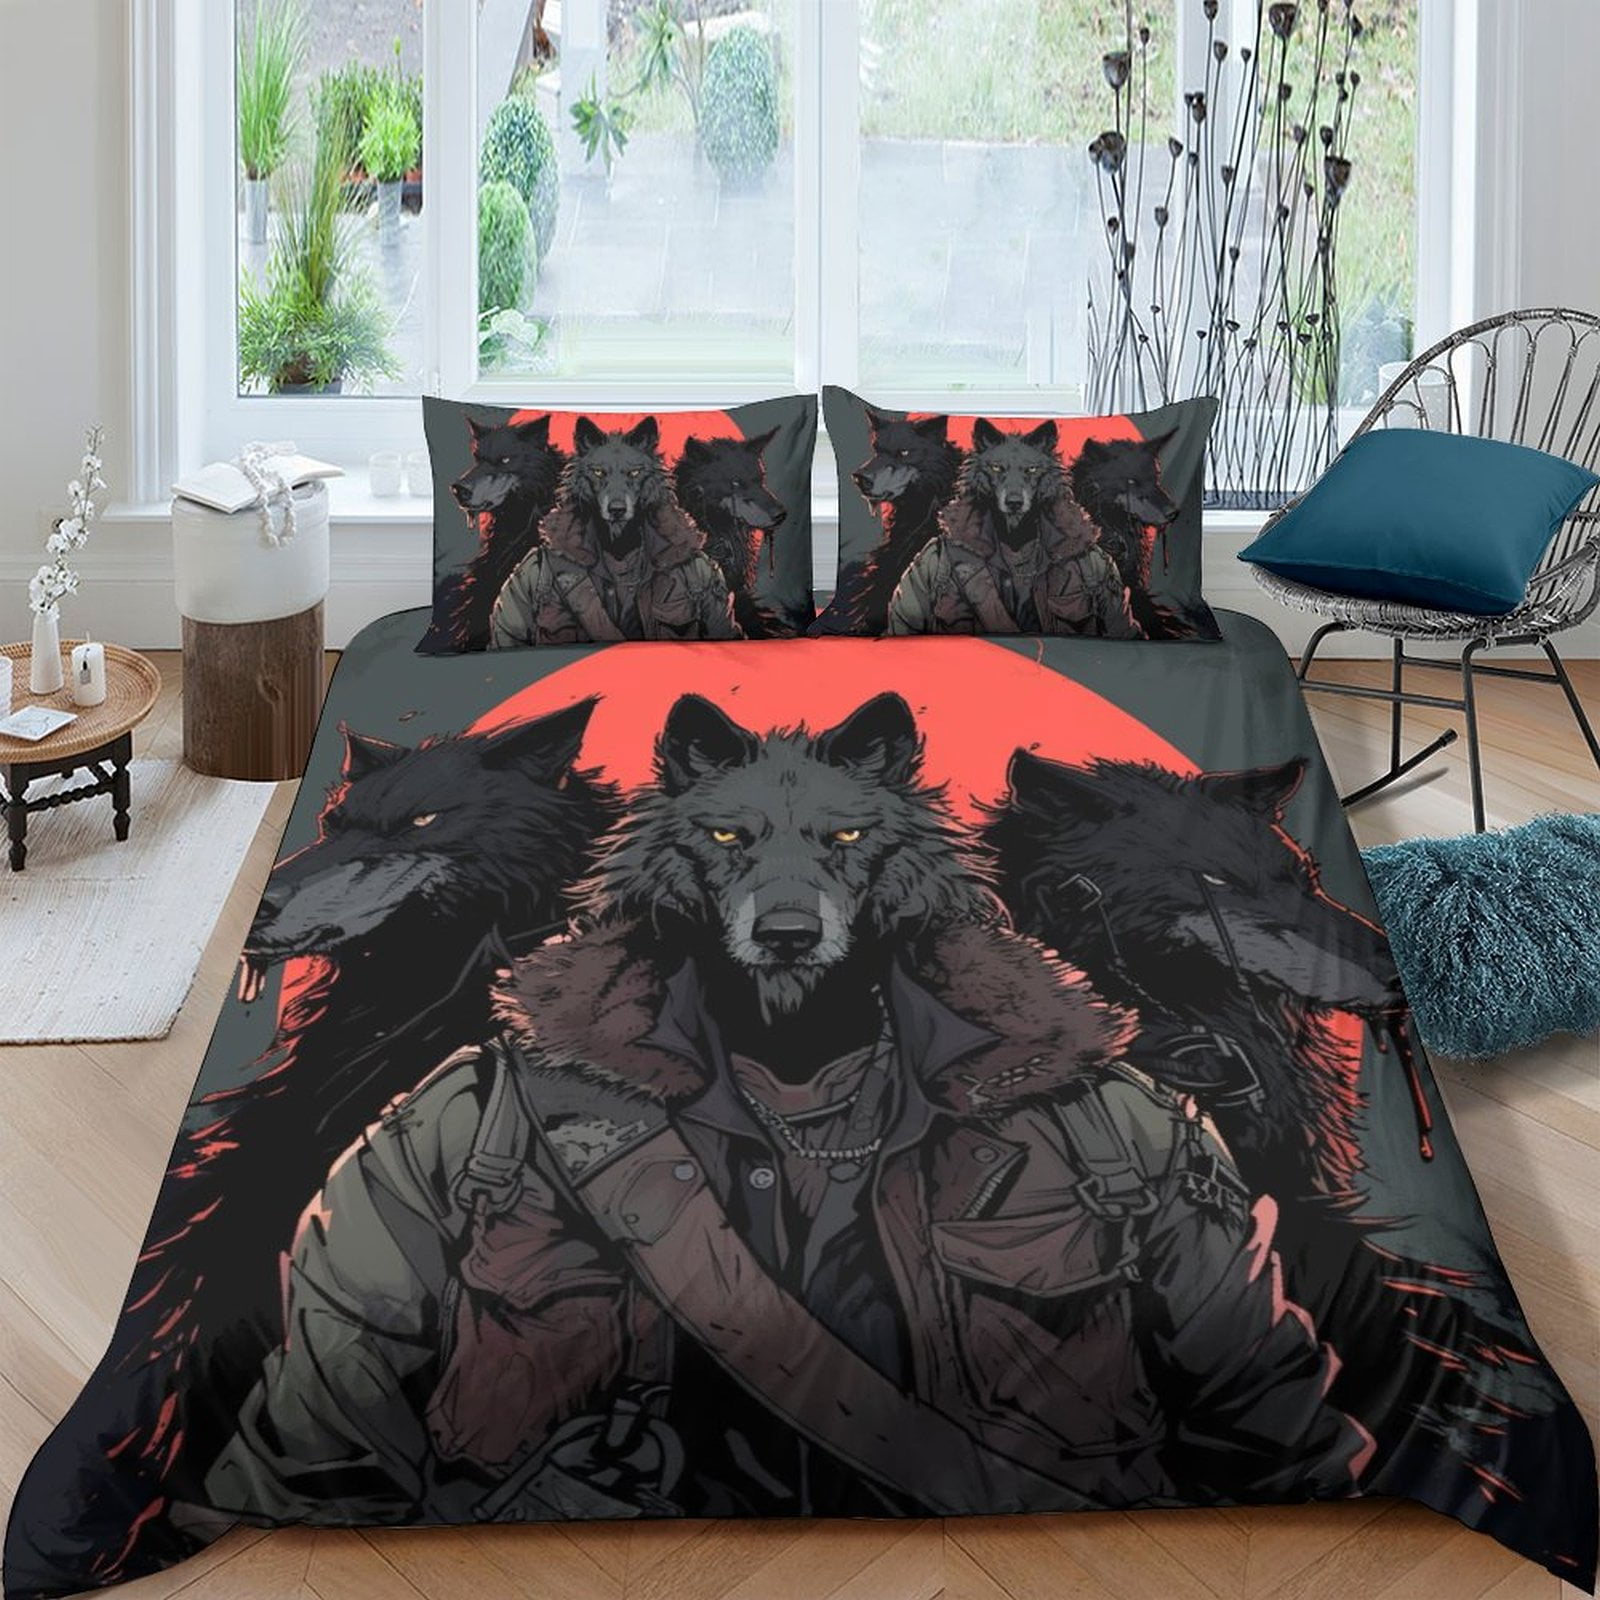 Duvet Cover Set 3D Wolf Printed Bedspreads Bedroom Decor Home Textiles ...